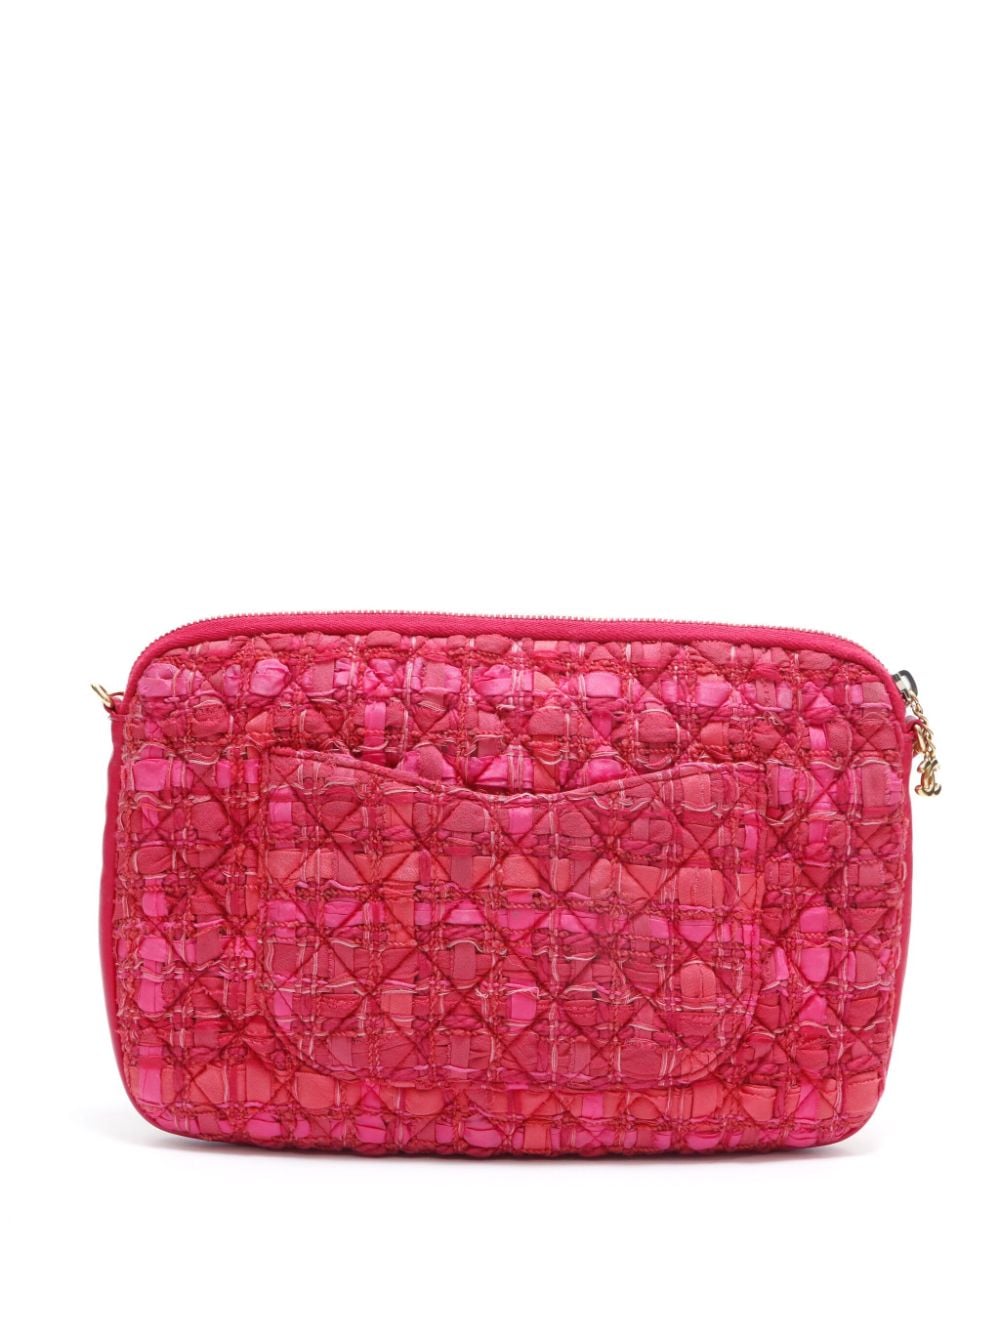 Pre-owned Chanel 2016 Tweed Girl Shoulder Bag In Pink